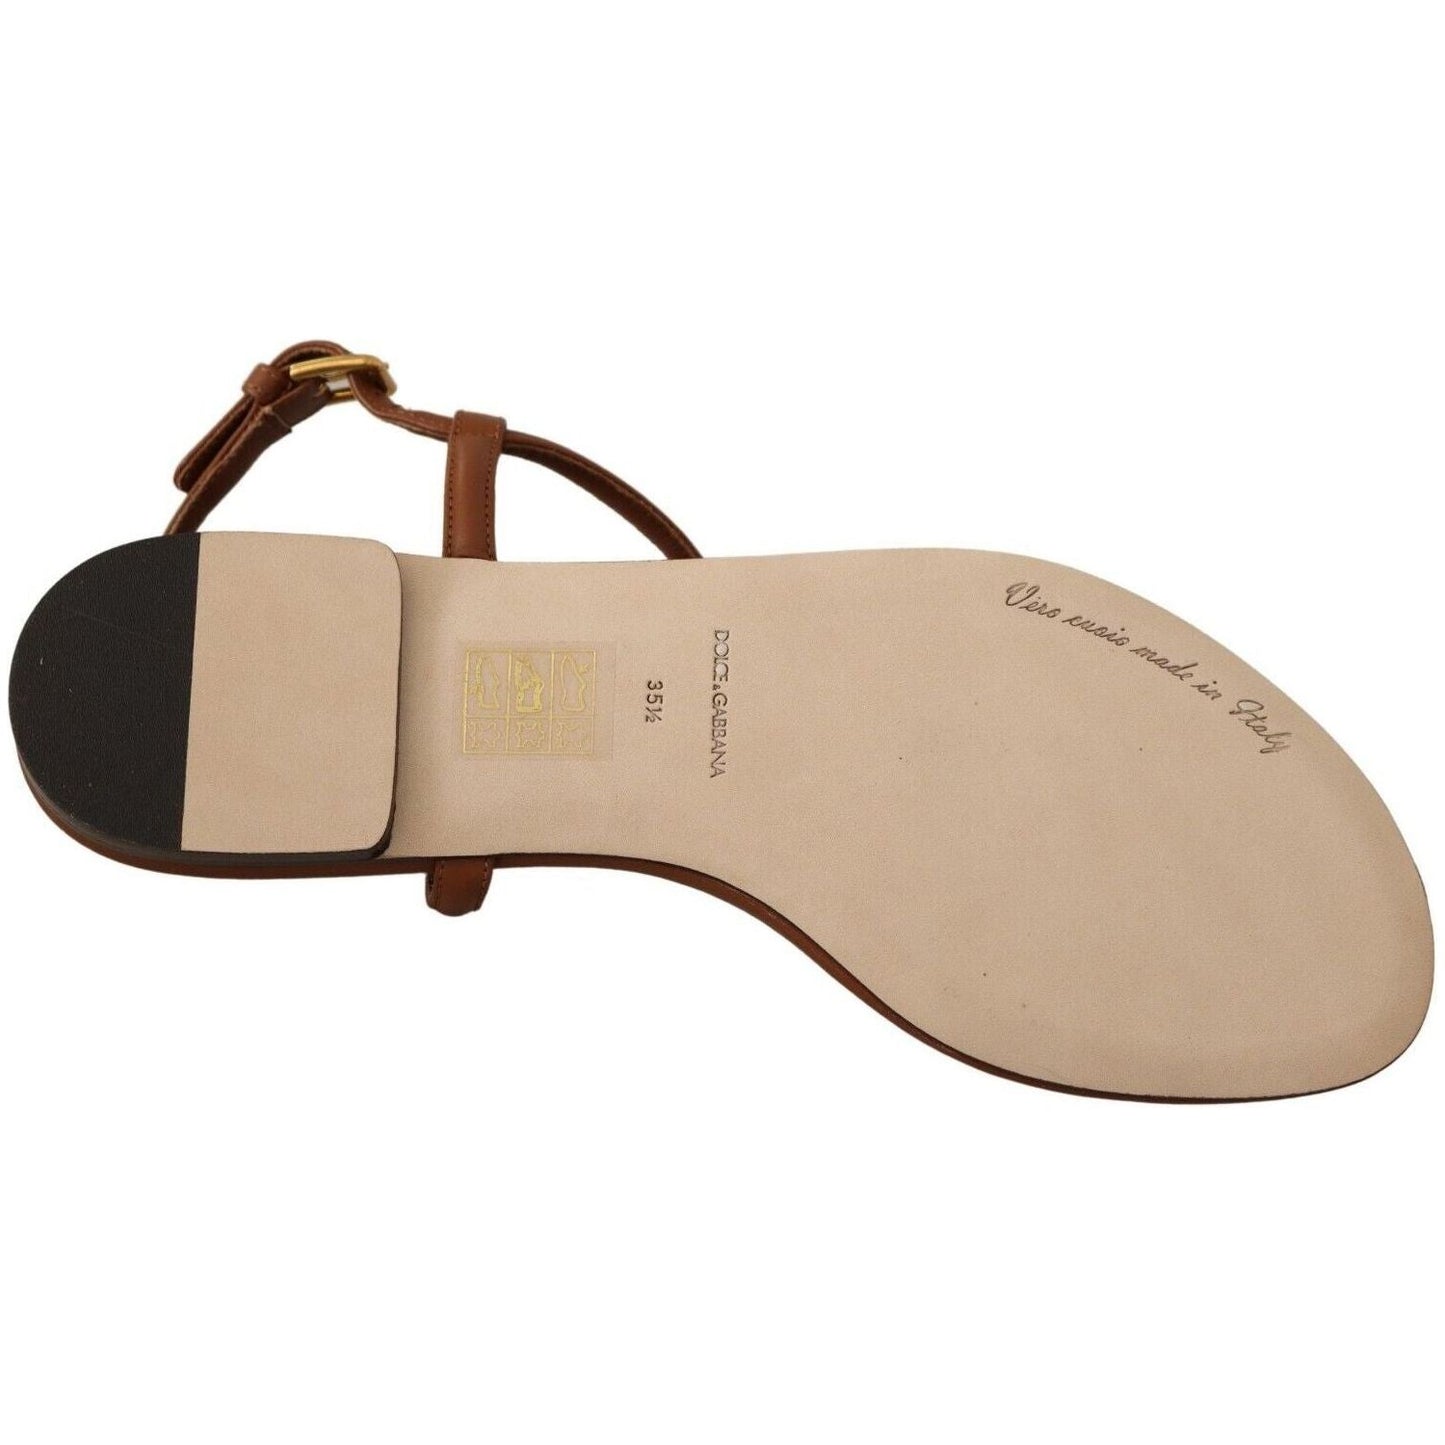 Dolce & Gabbana Elegant Leather T-Strap Flat Sandals brown-leather-t-strap-slides-flats-sandals-shoes s-l1600-40-15-7d7ba183-c9d.jpg